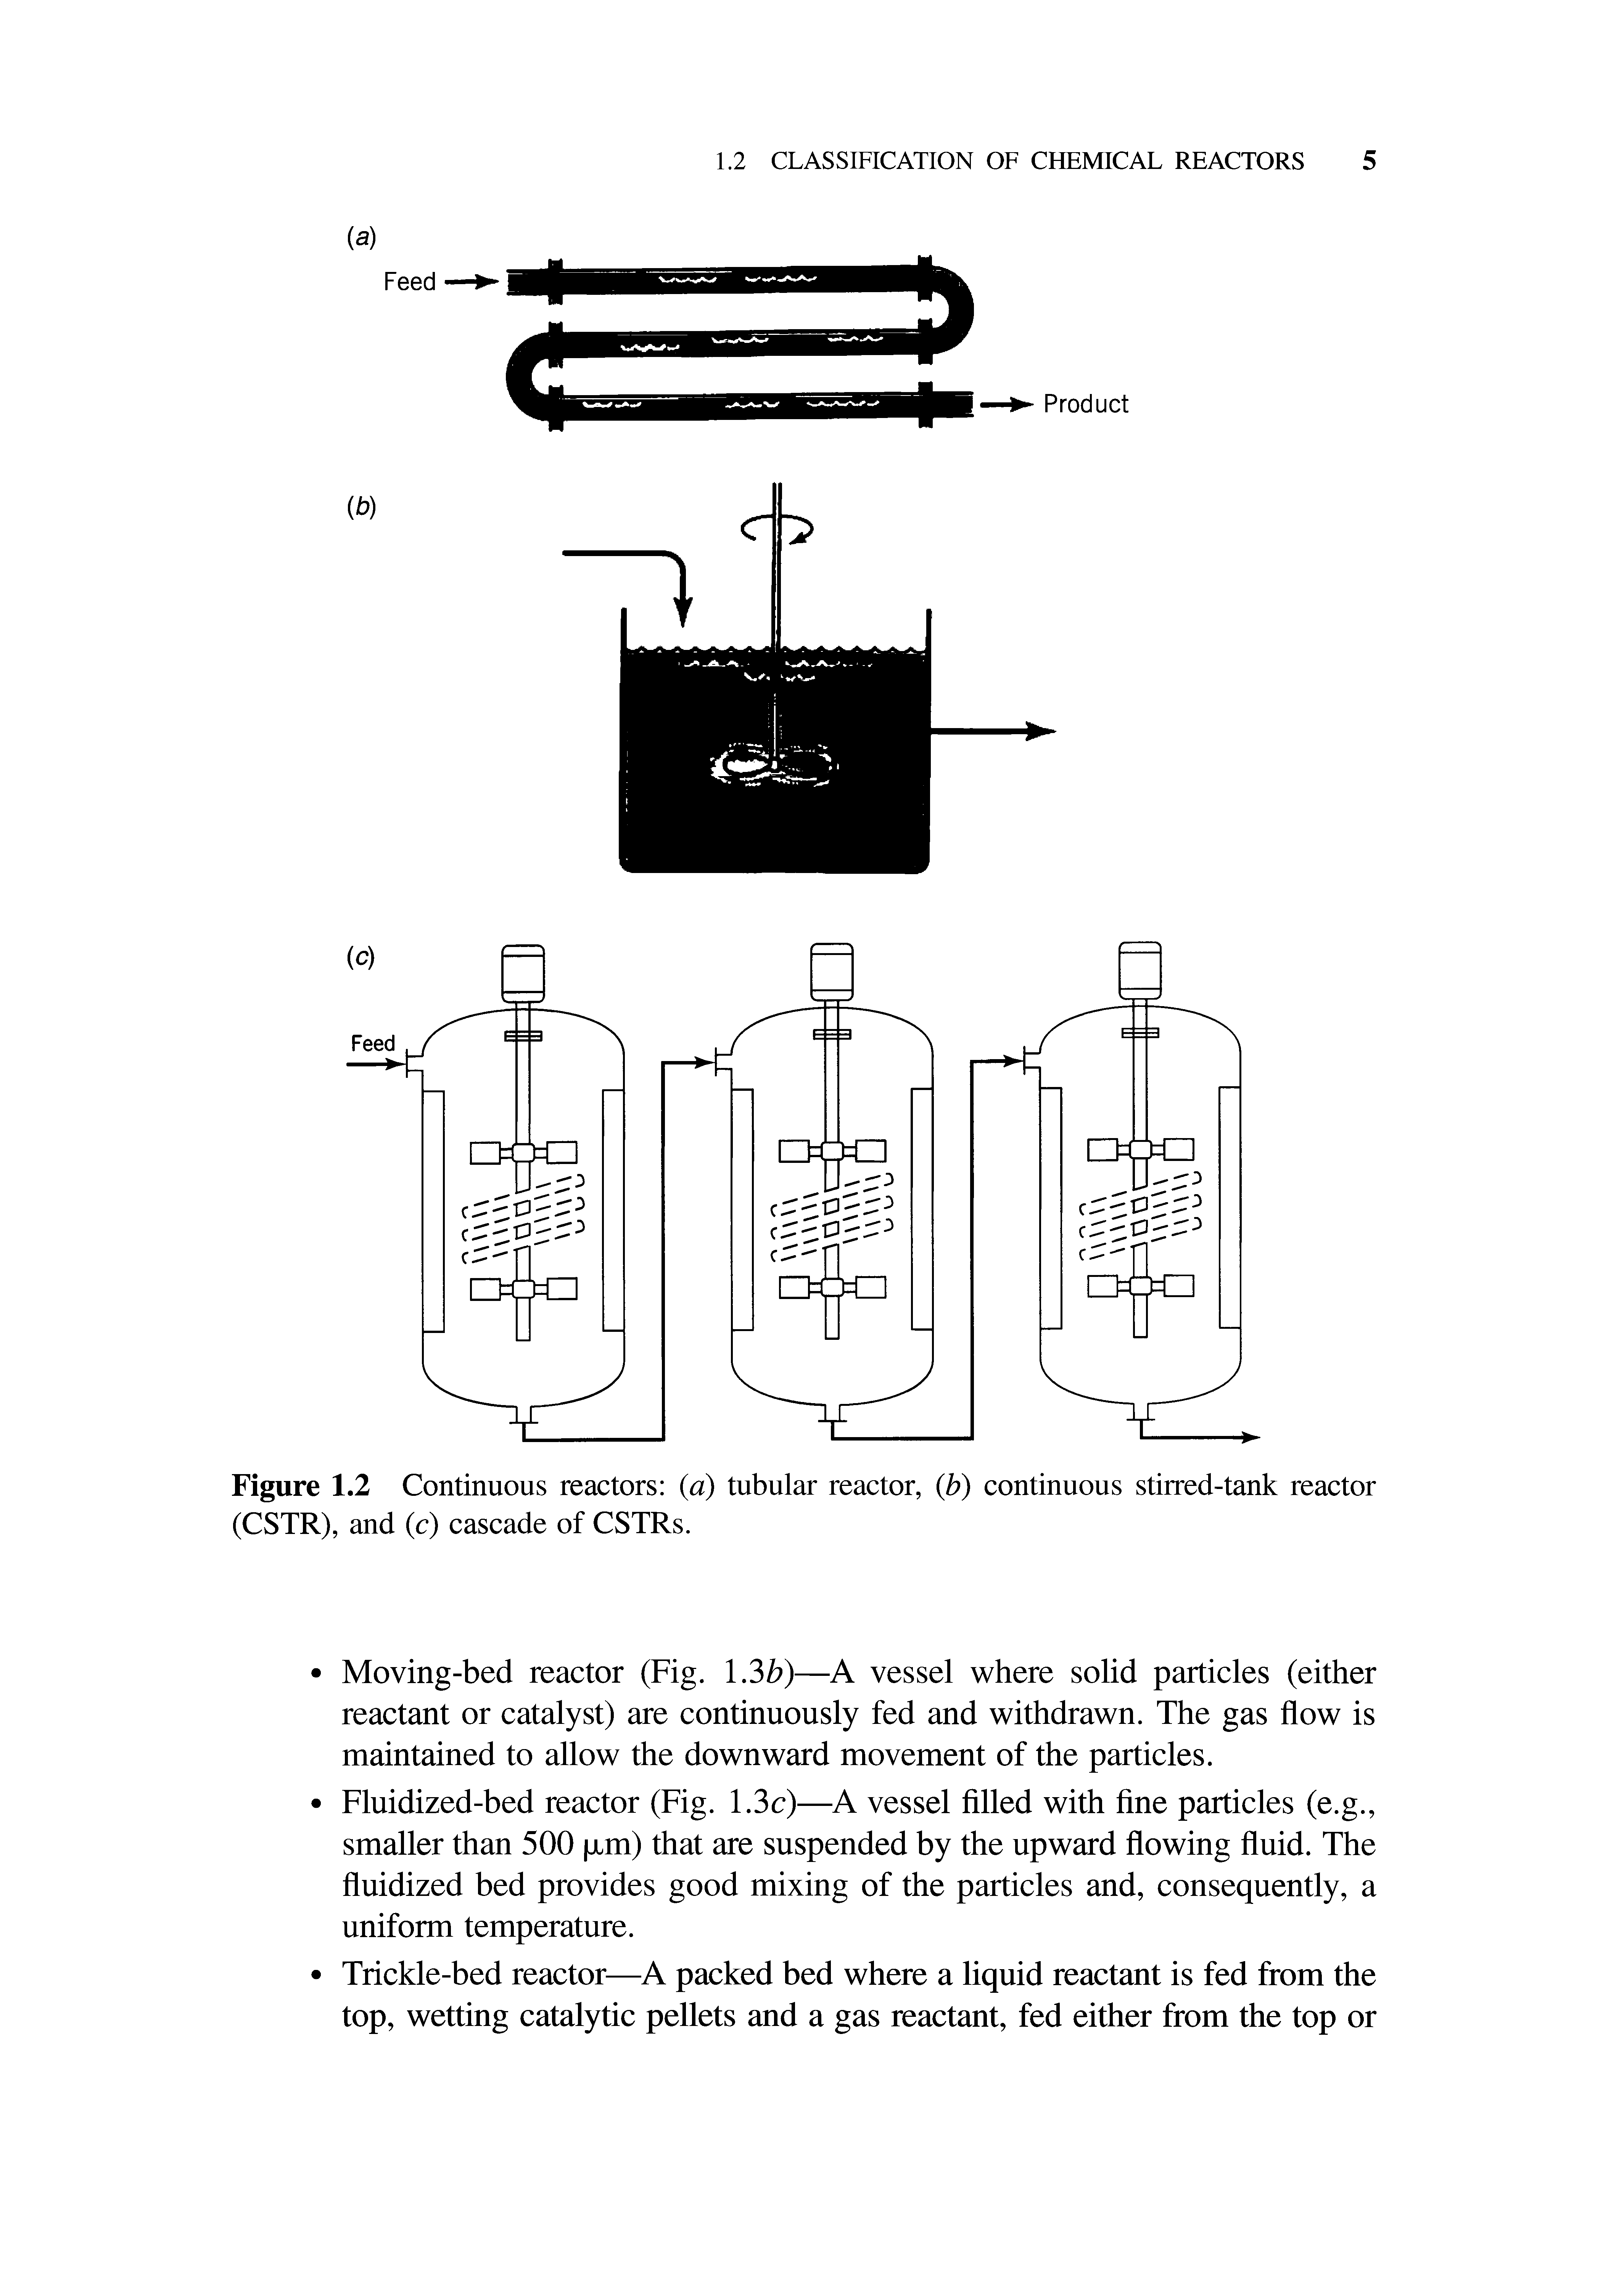 Figure 1.2 Continuous reactors (a) tubular reactor, (b) continuous stirred-tank reactor (CSTR), and (c) cascade of CSTRs.